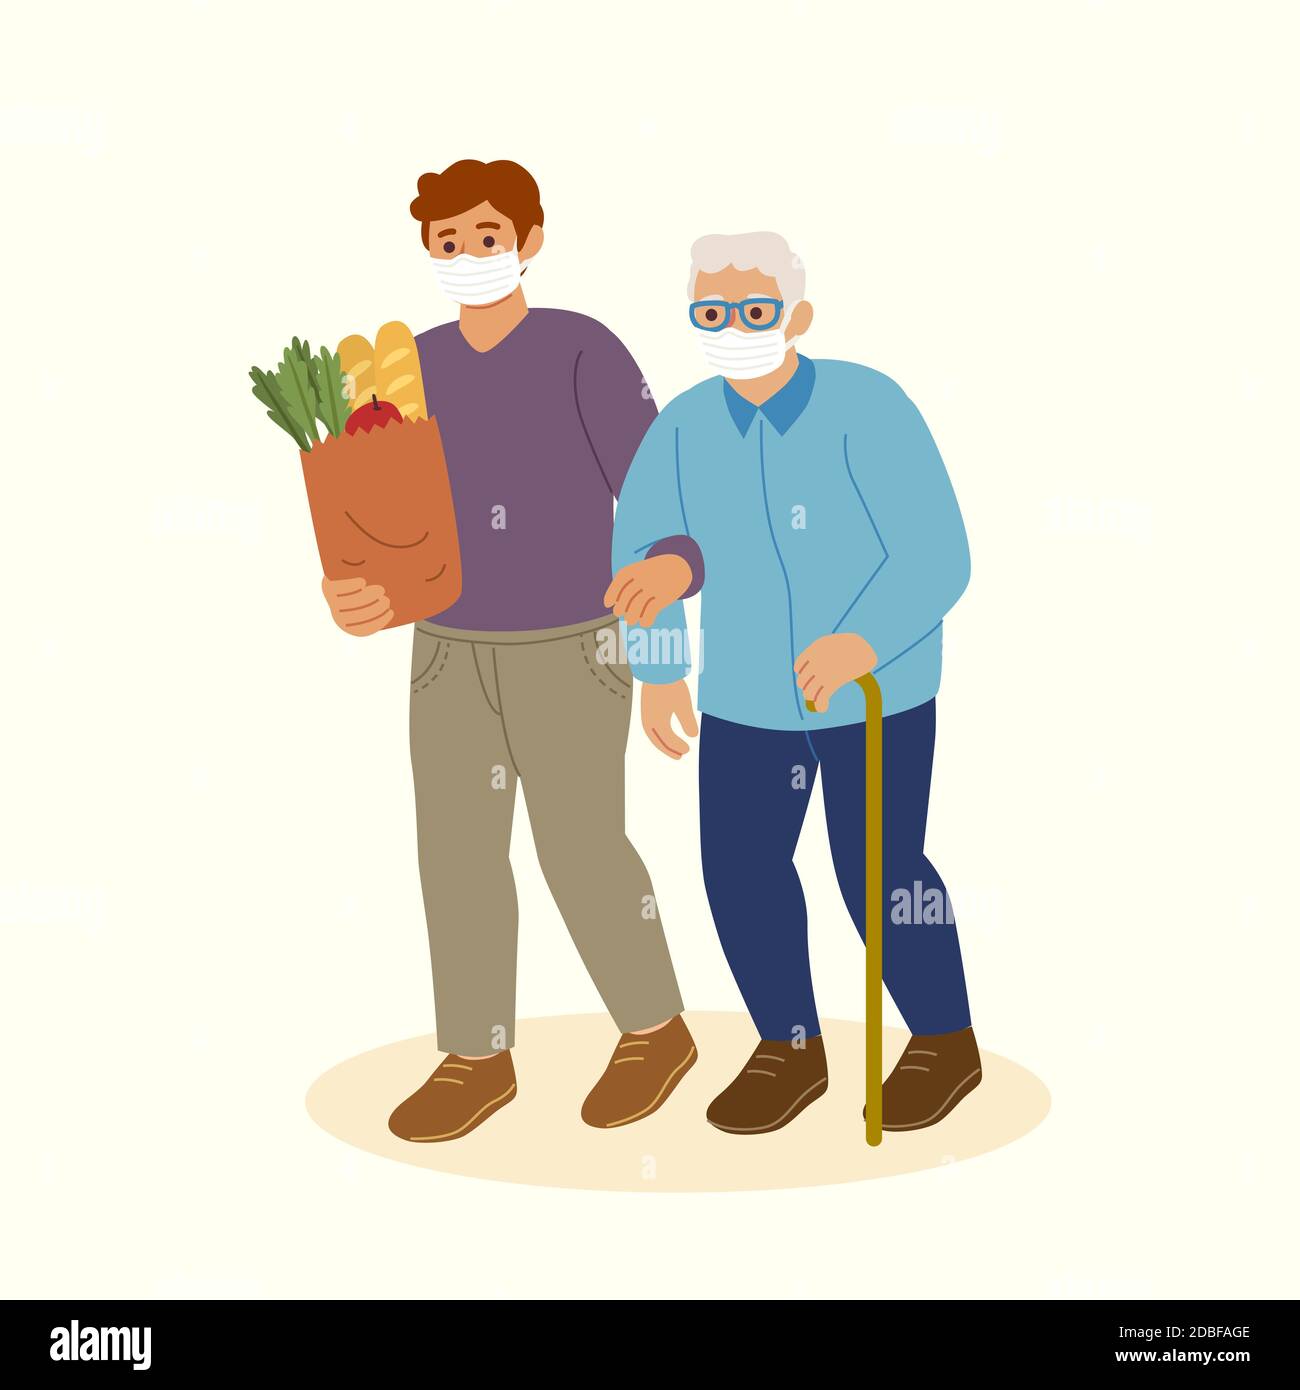 Volunteers helping older people Vector illustration Stock Vector